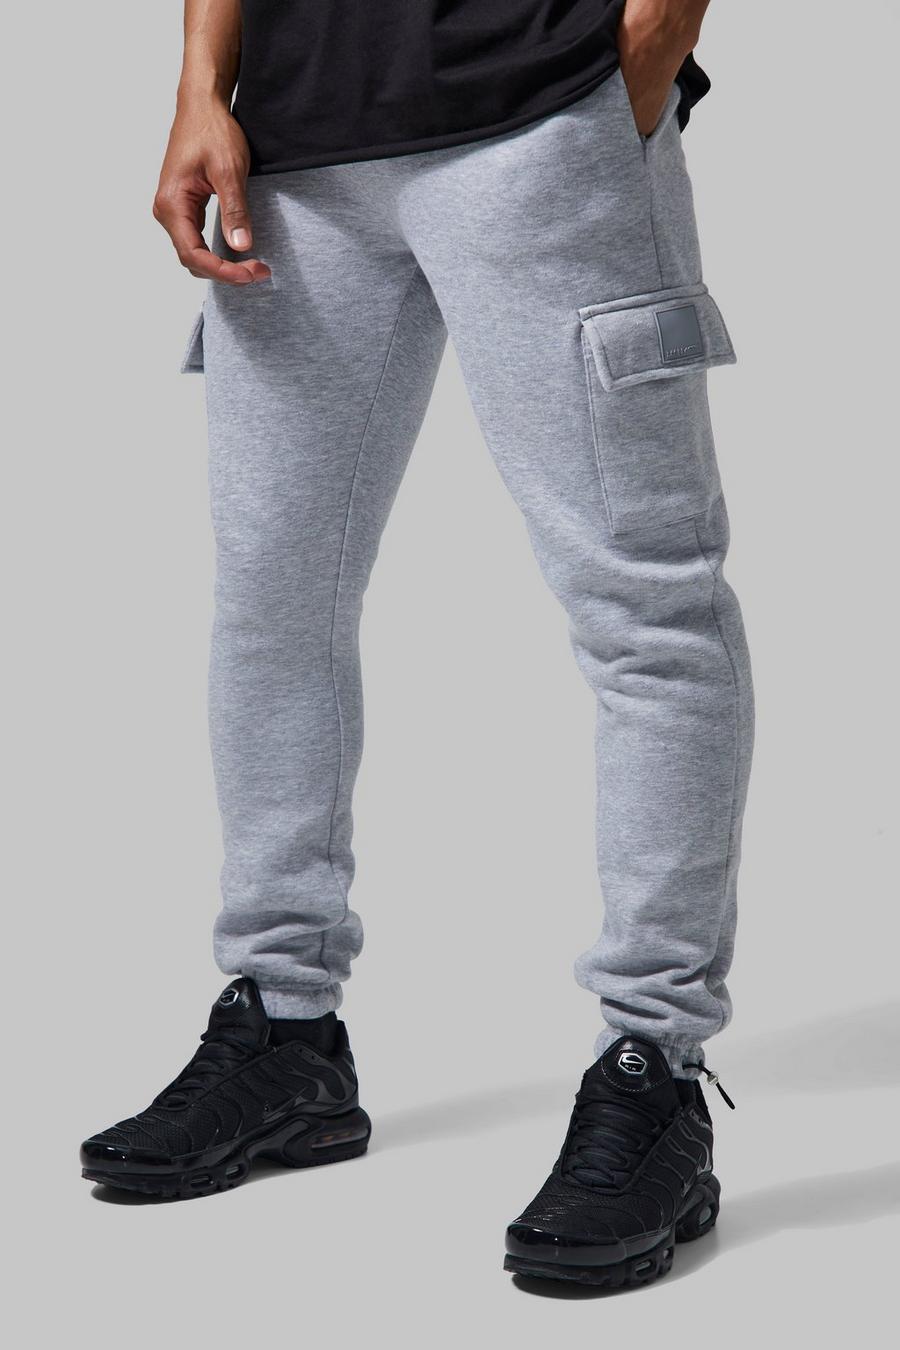 Pantaloni tuta Cargo Man Active Gym con polsini alle caviglie e fermacorde, Grey marl image number 1